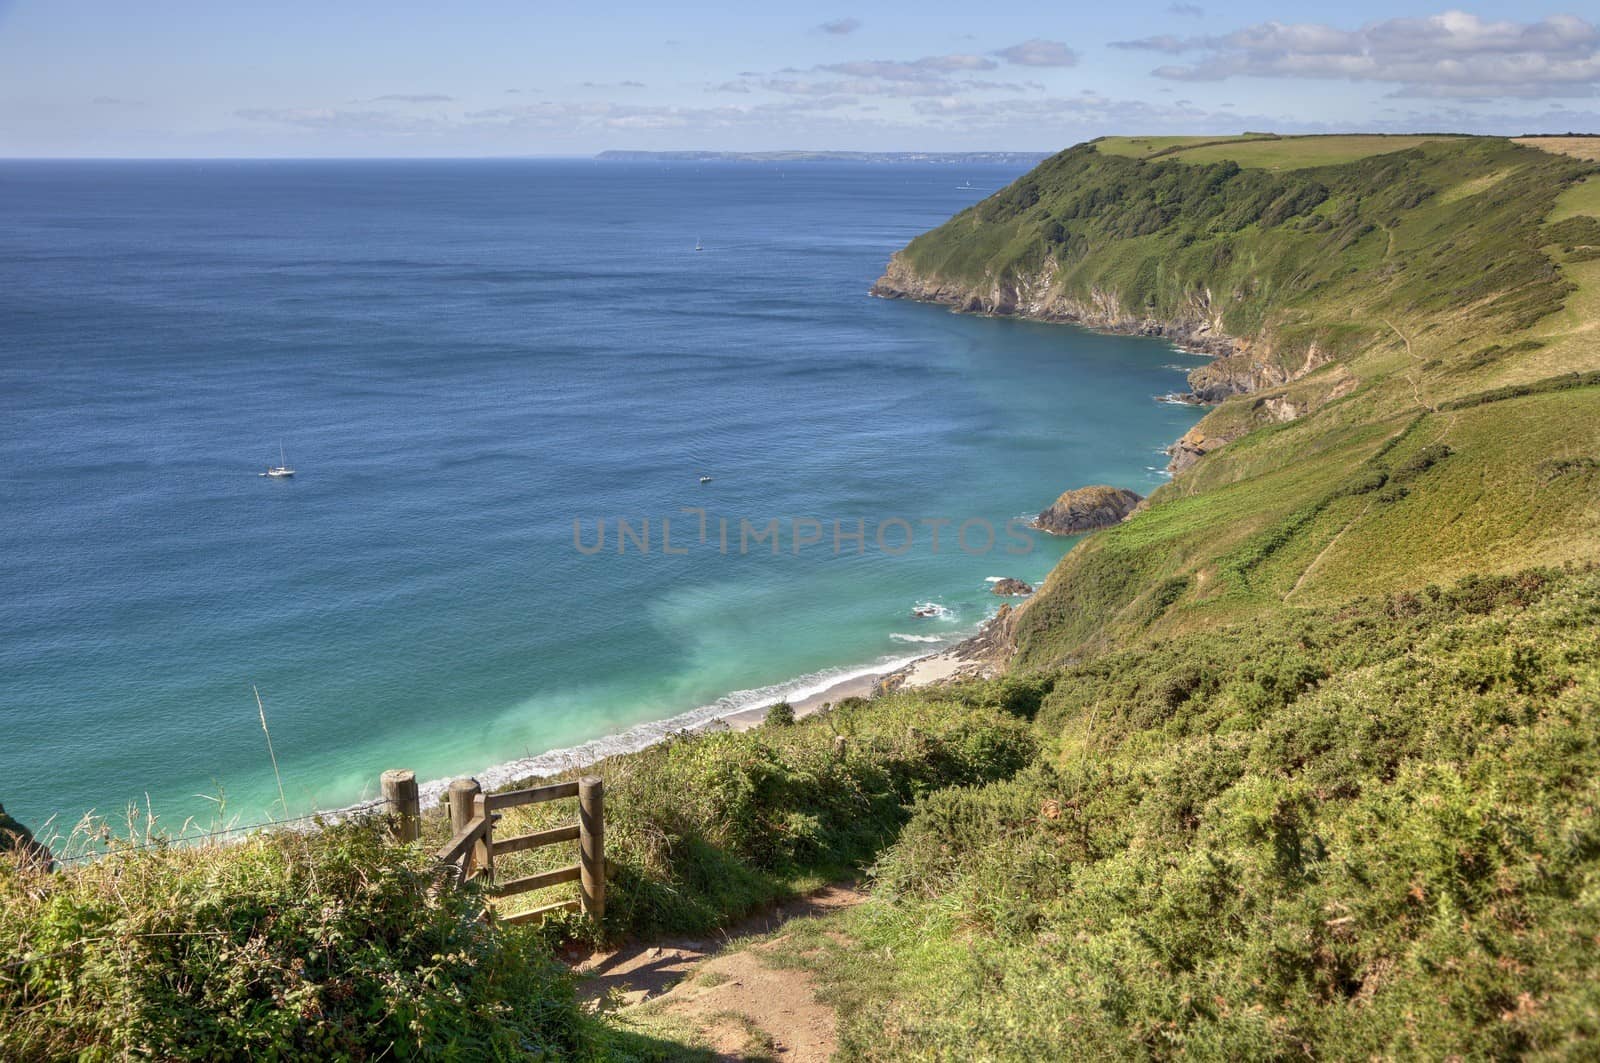 Cornish coastline in Summer, England by andrewroland